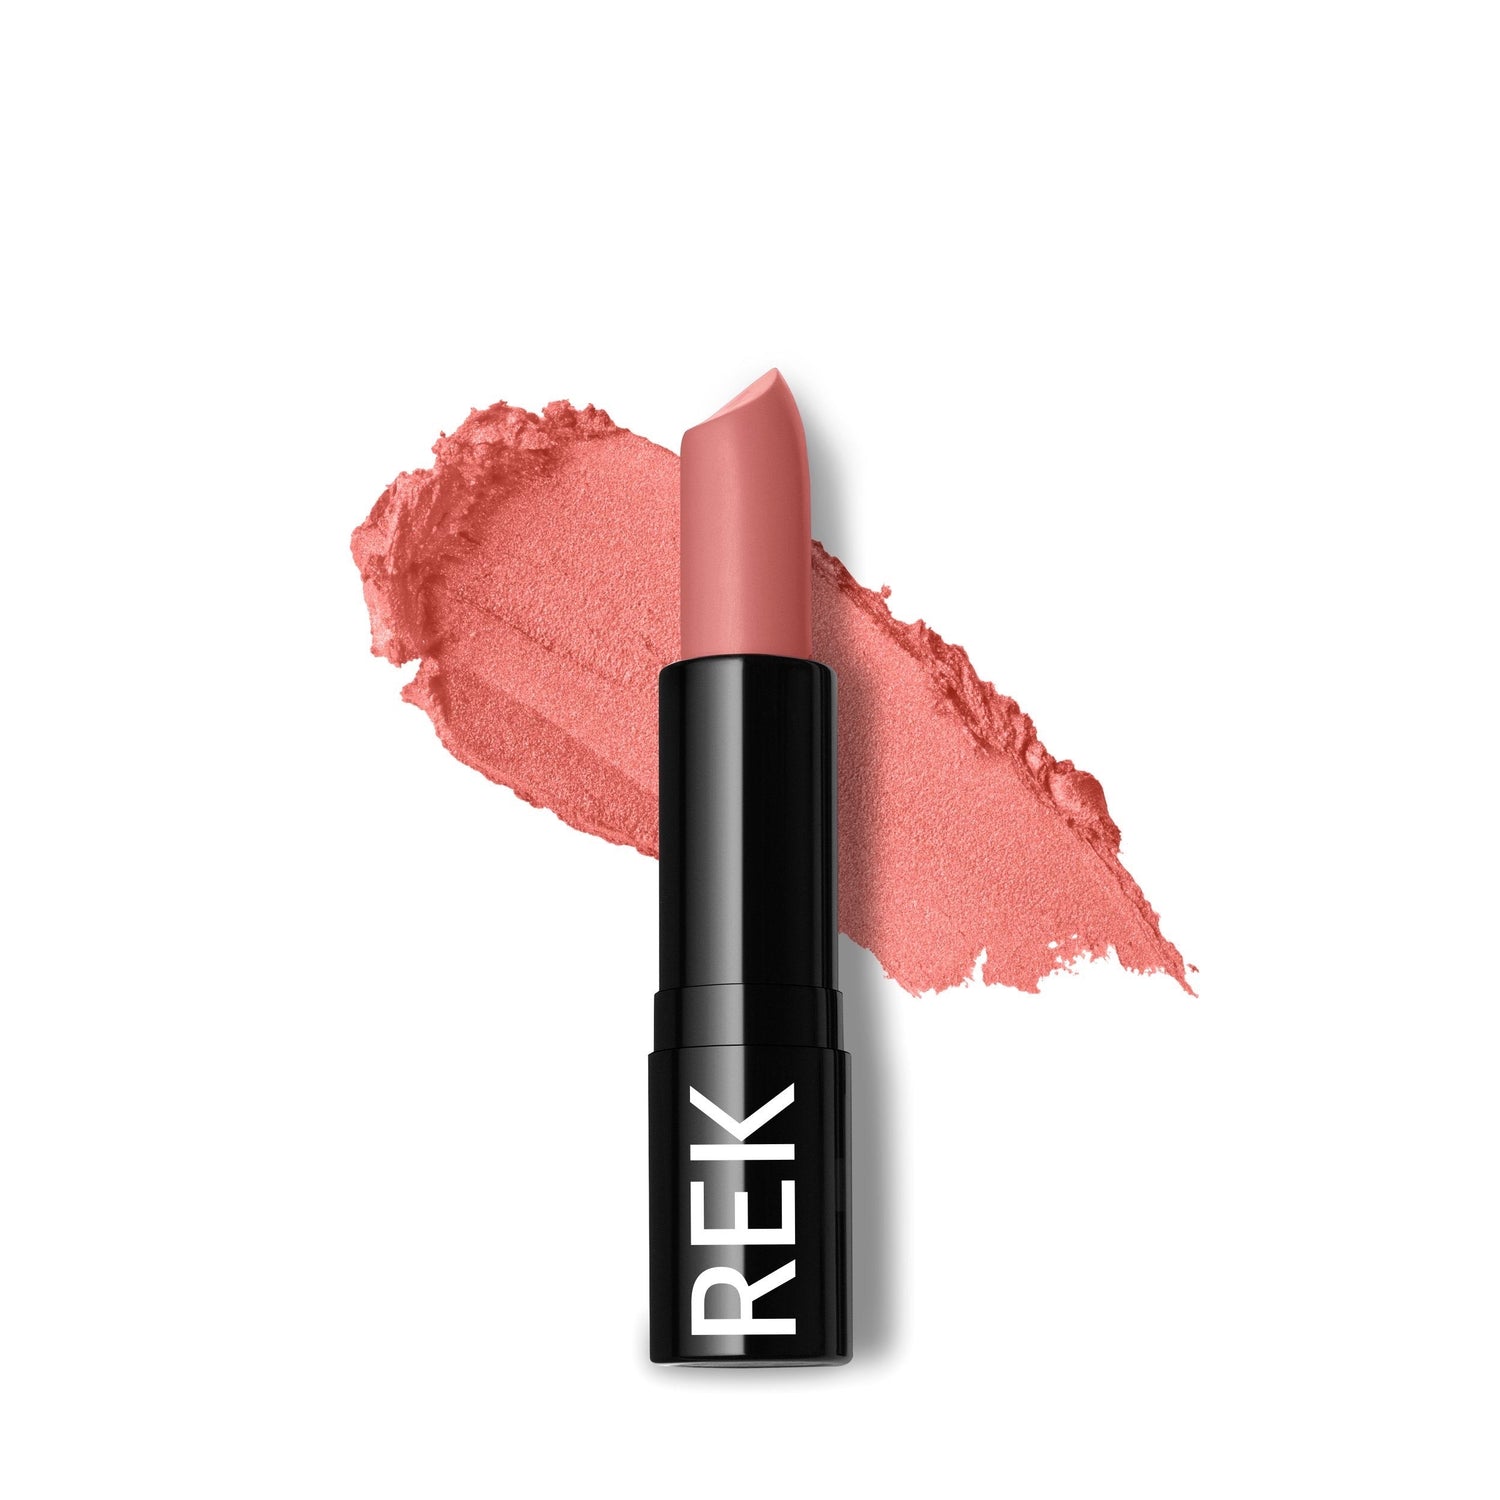 NEW! Cameron| Luxury Matte Lipstick | REK Cosmetics - Premium Lipstick from REK Cosmetics - Just $20! Shop now at REK Cosmetics